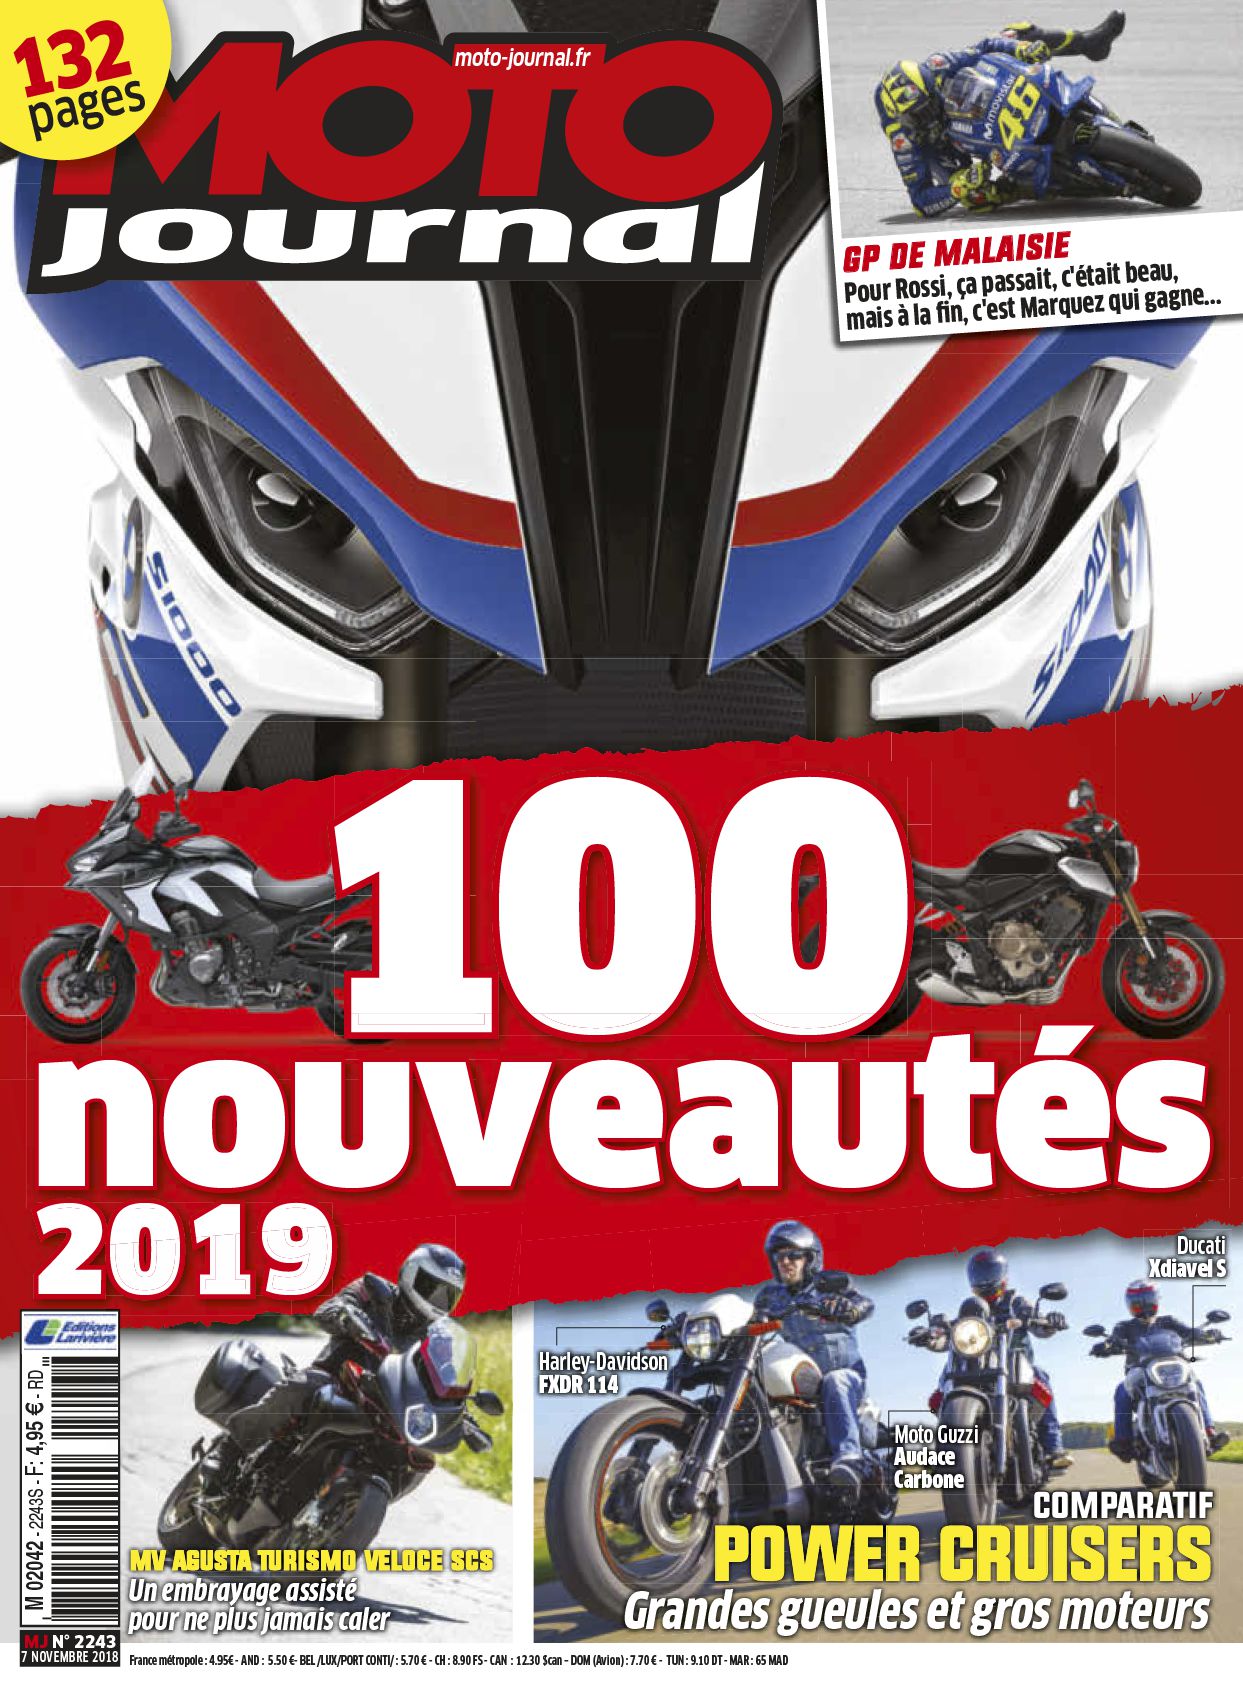 Moto Journal numerique n° 2243